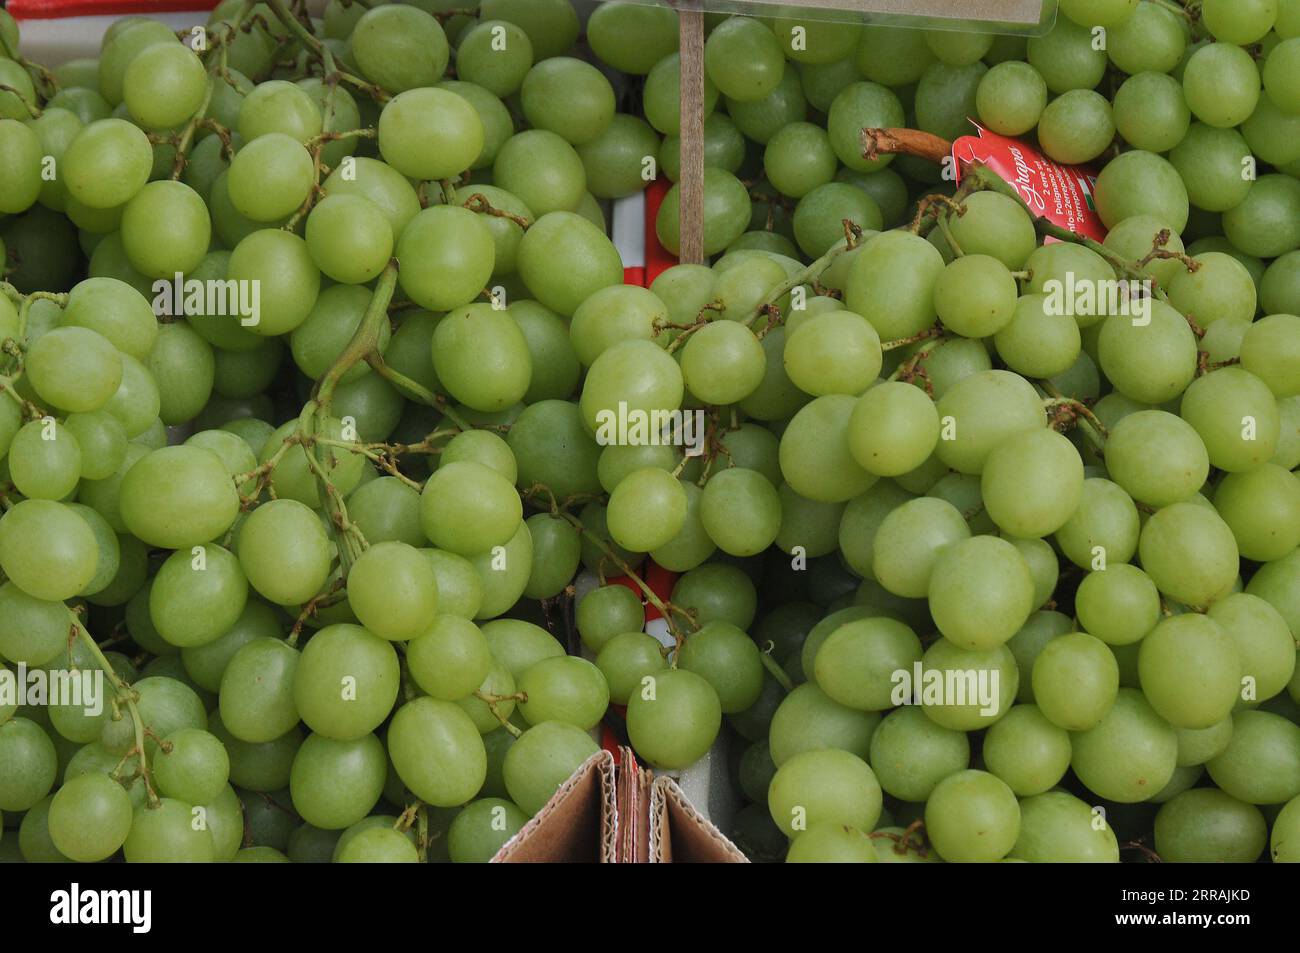 https://c8.alamy.com/comp/2RRAJKD/07-sept-2023-redn-and-green-grapes-fruit-and-vegetable-and-fruit-shoppers-at-farmers-market-in-danish-capital-copenhagen-denmark-photofrancis-joseph-deandean-pictures-2RRAJKD.jpg